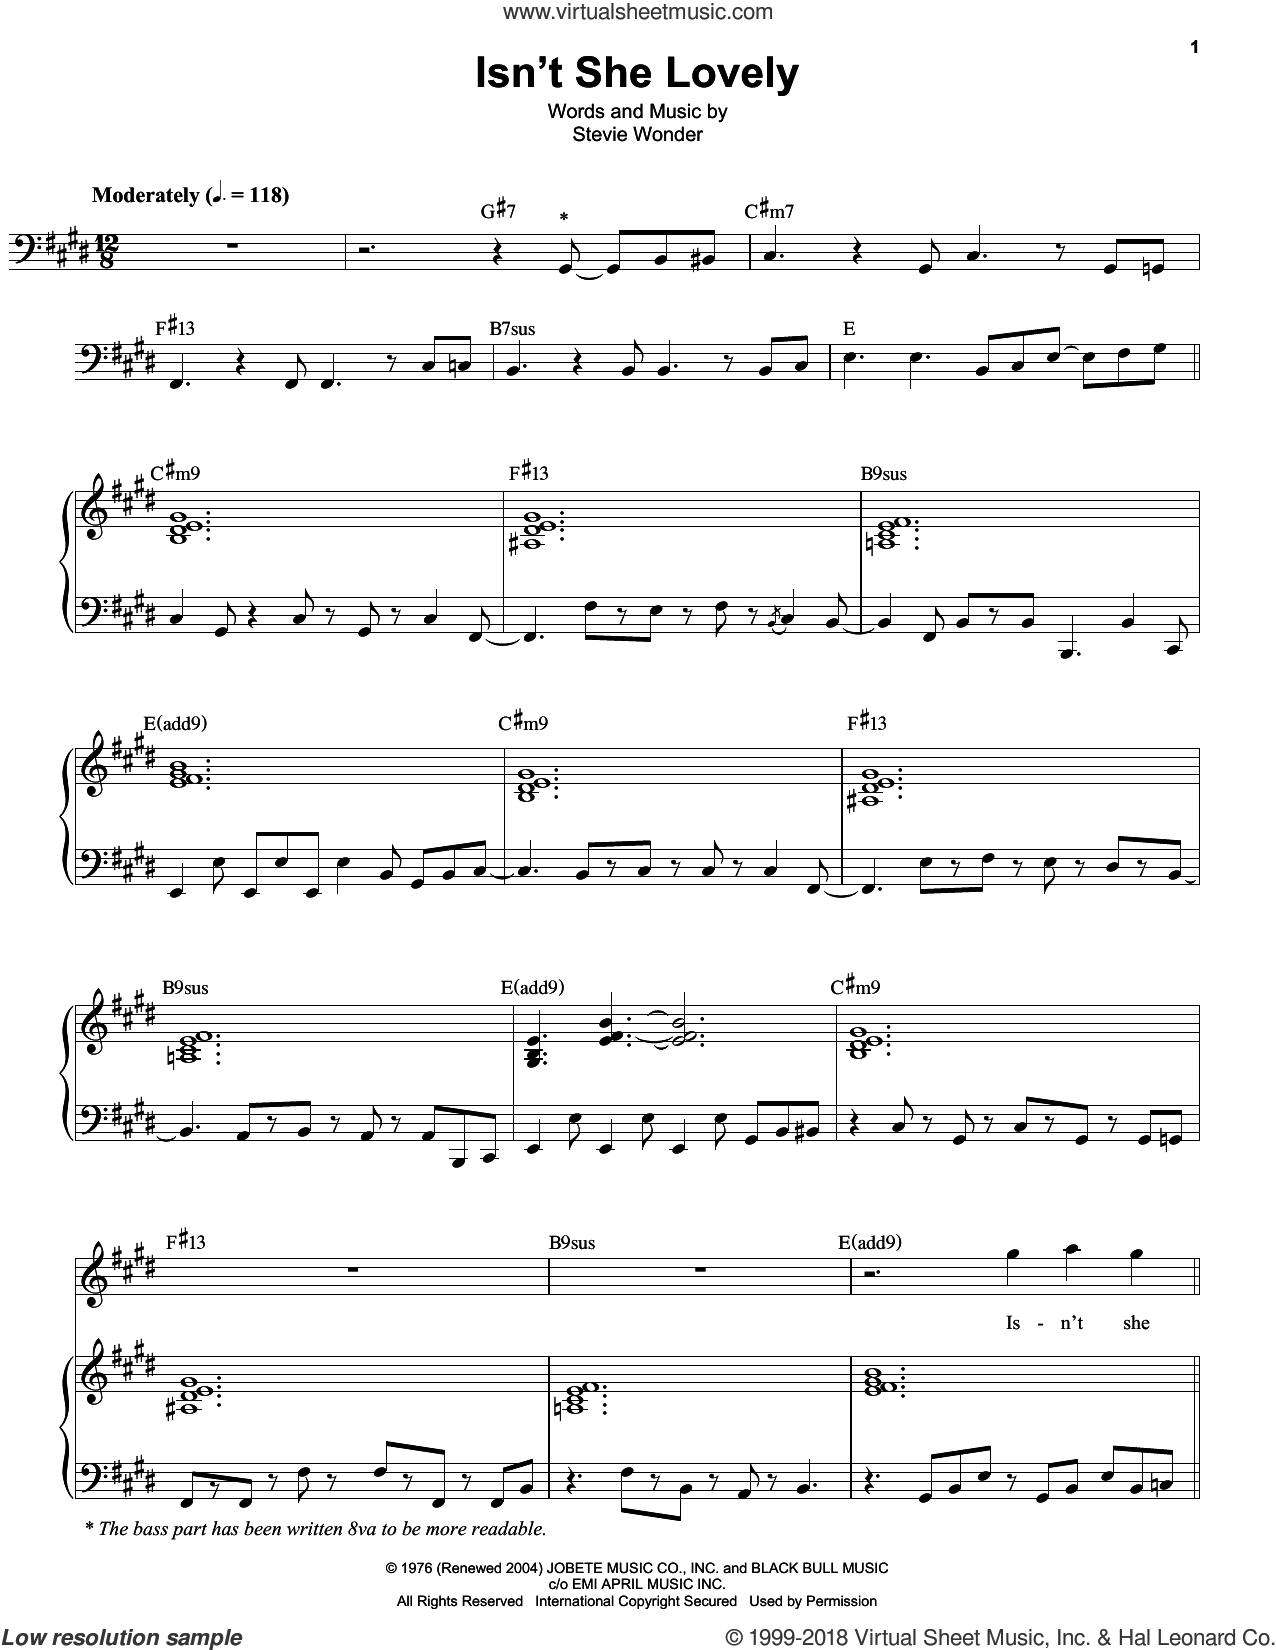 Wonder - Isn't She Lovely sheet music for keyboard or piano [PDF]